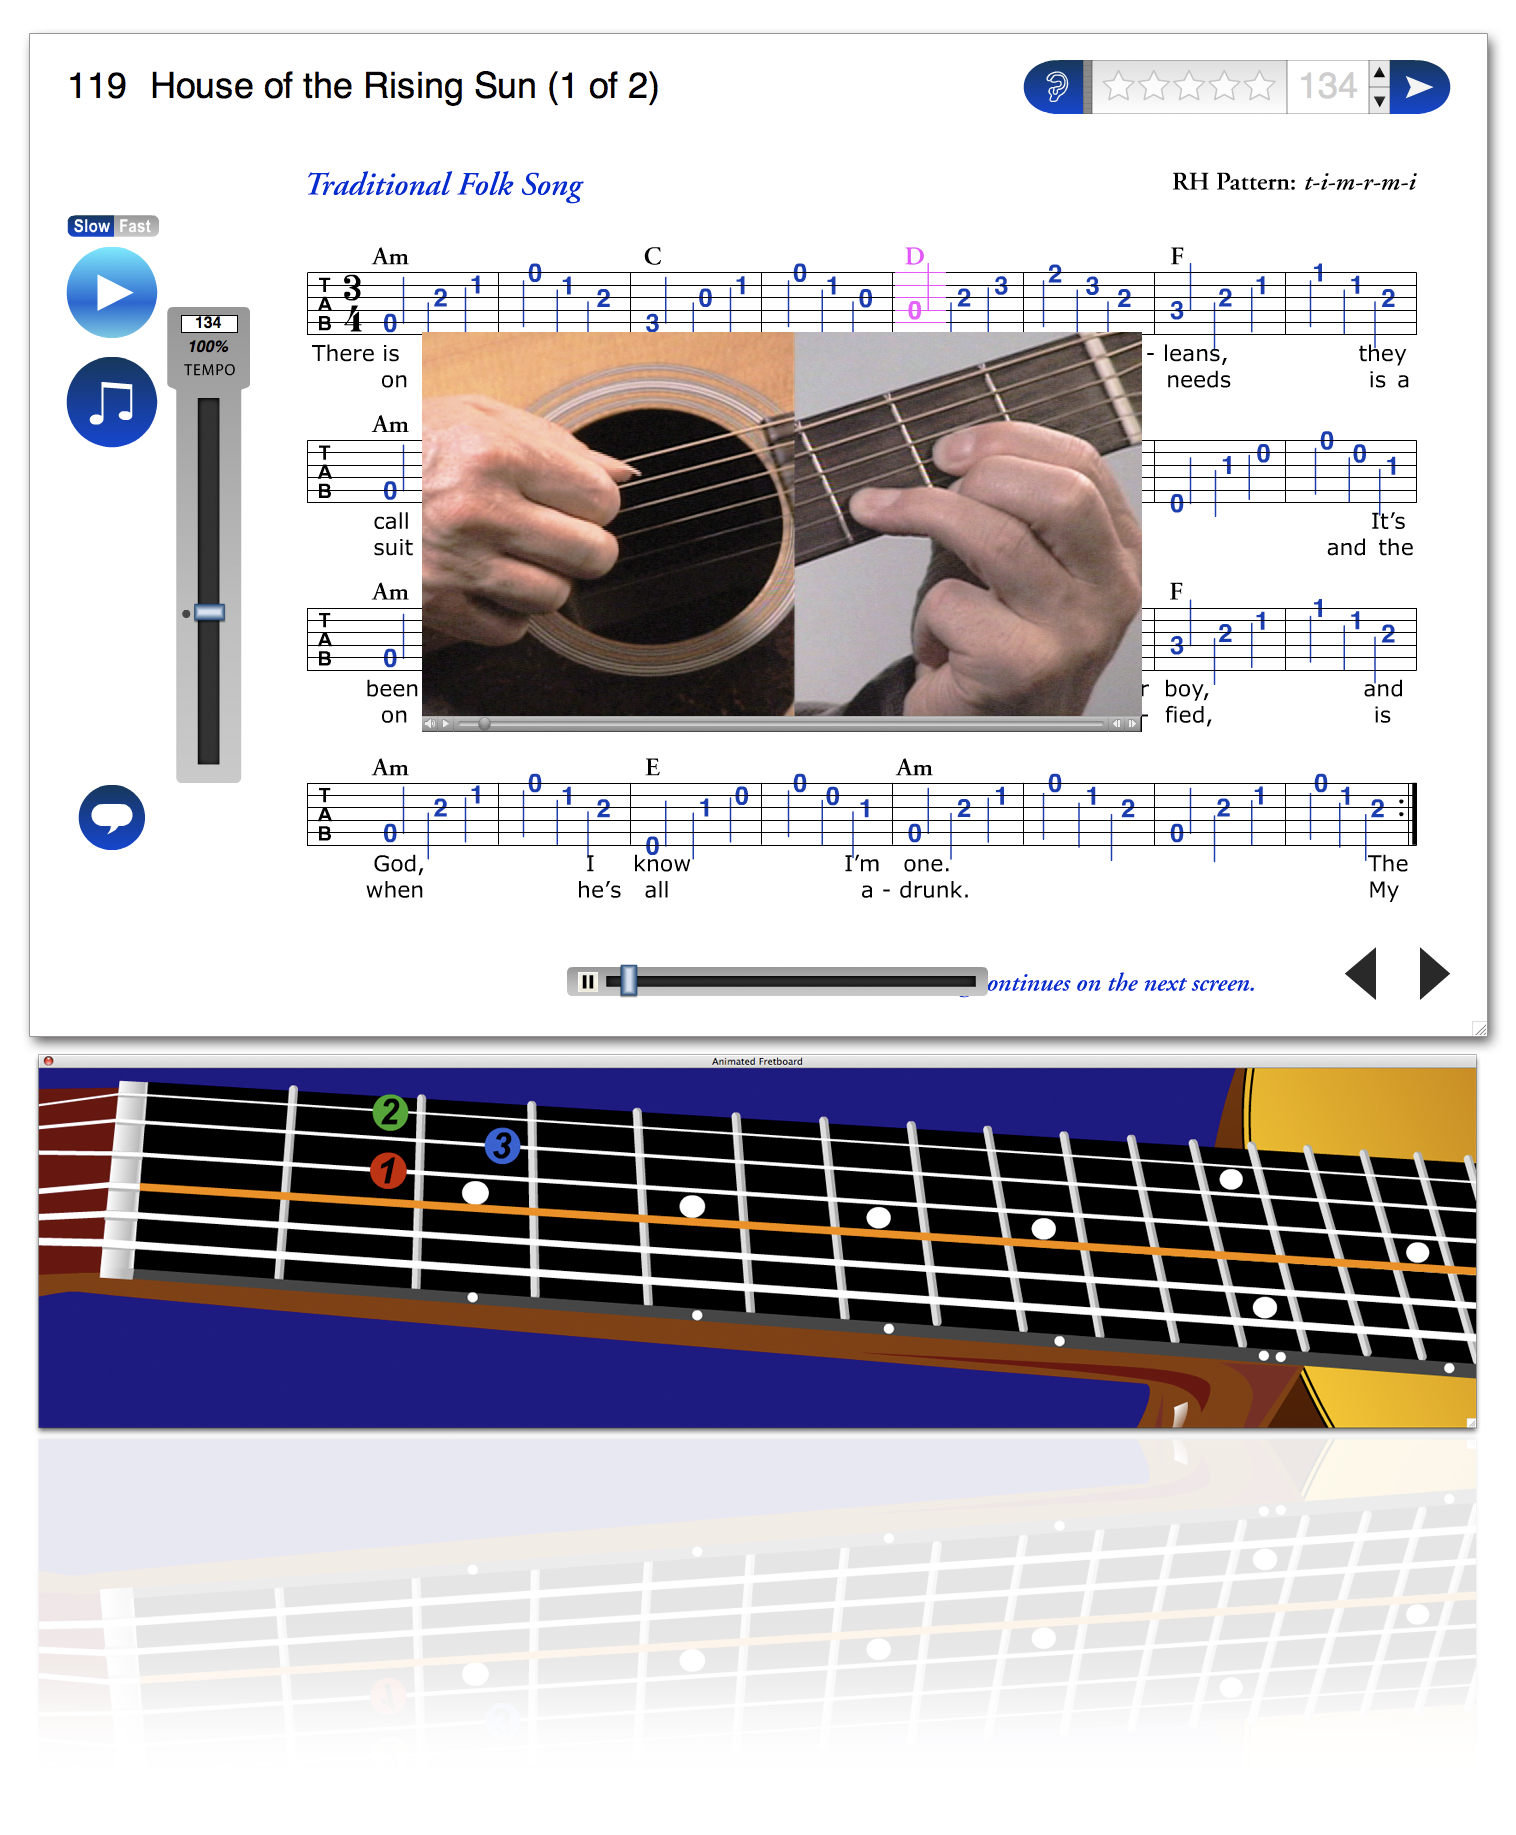 emedia guitar method midi connection